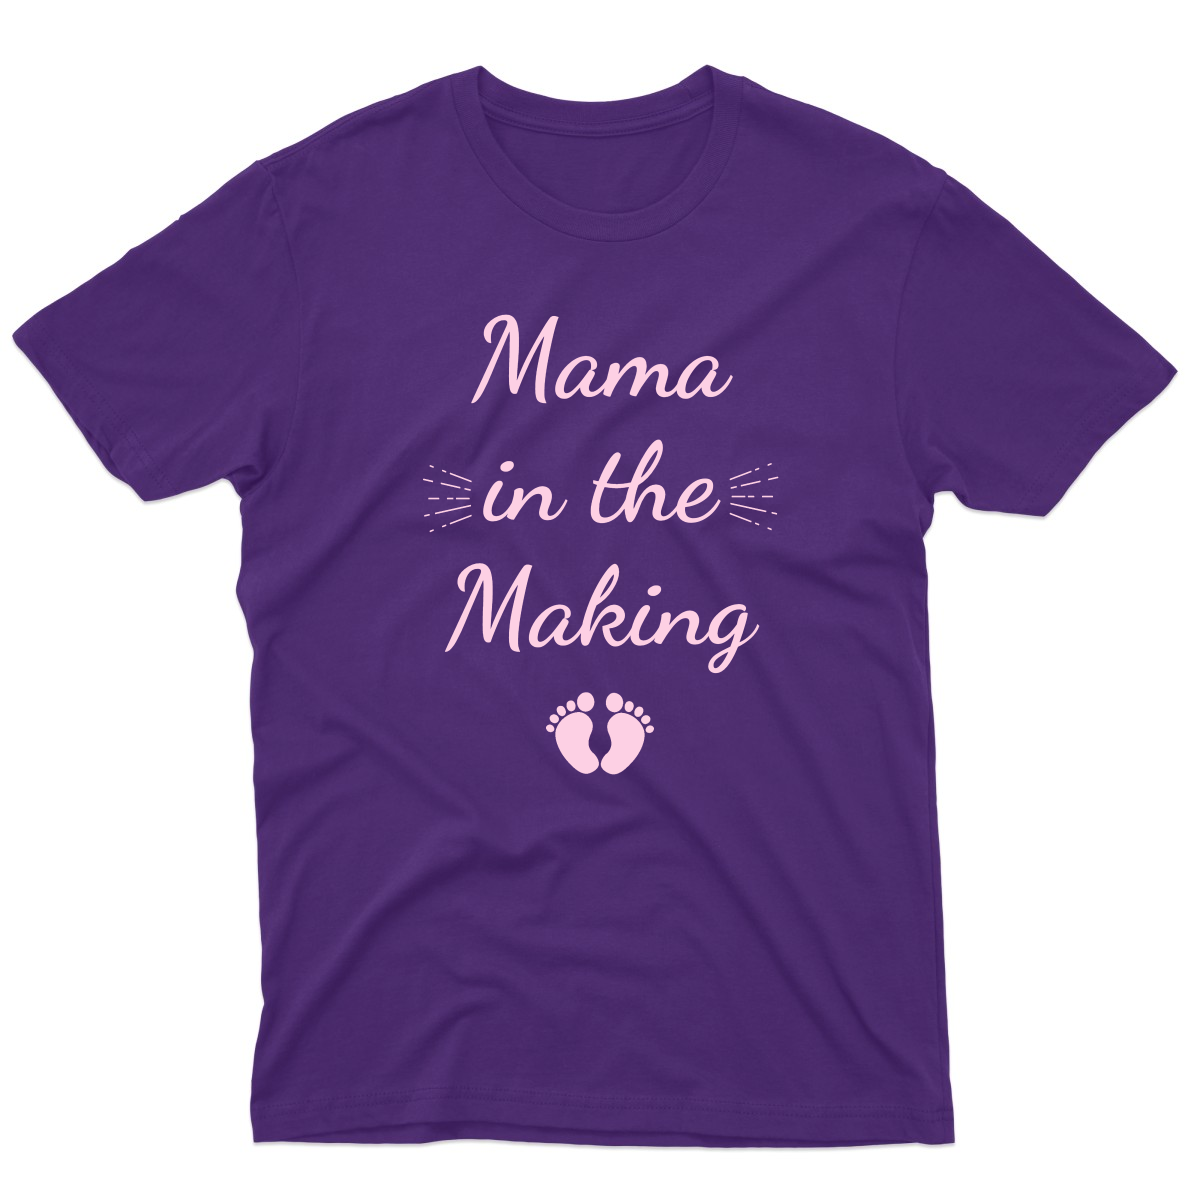 Mama in the Making Shirt Men's T-shirt | Purple